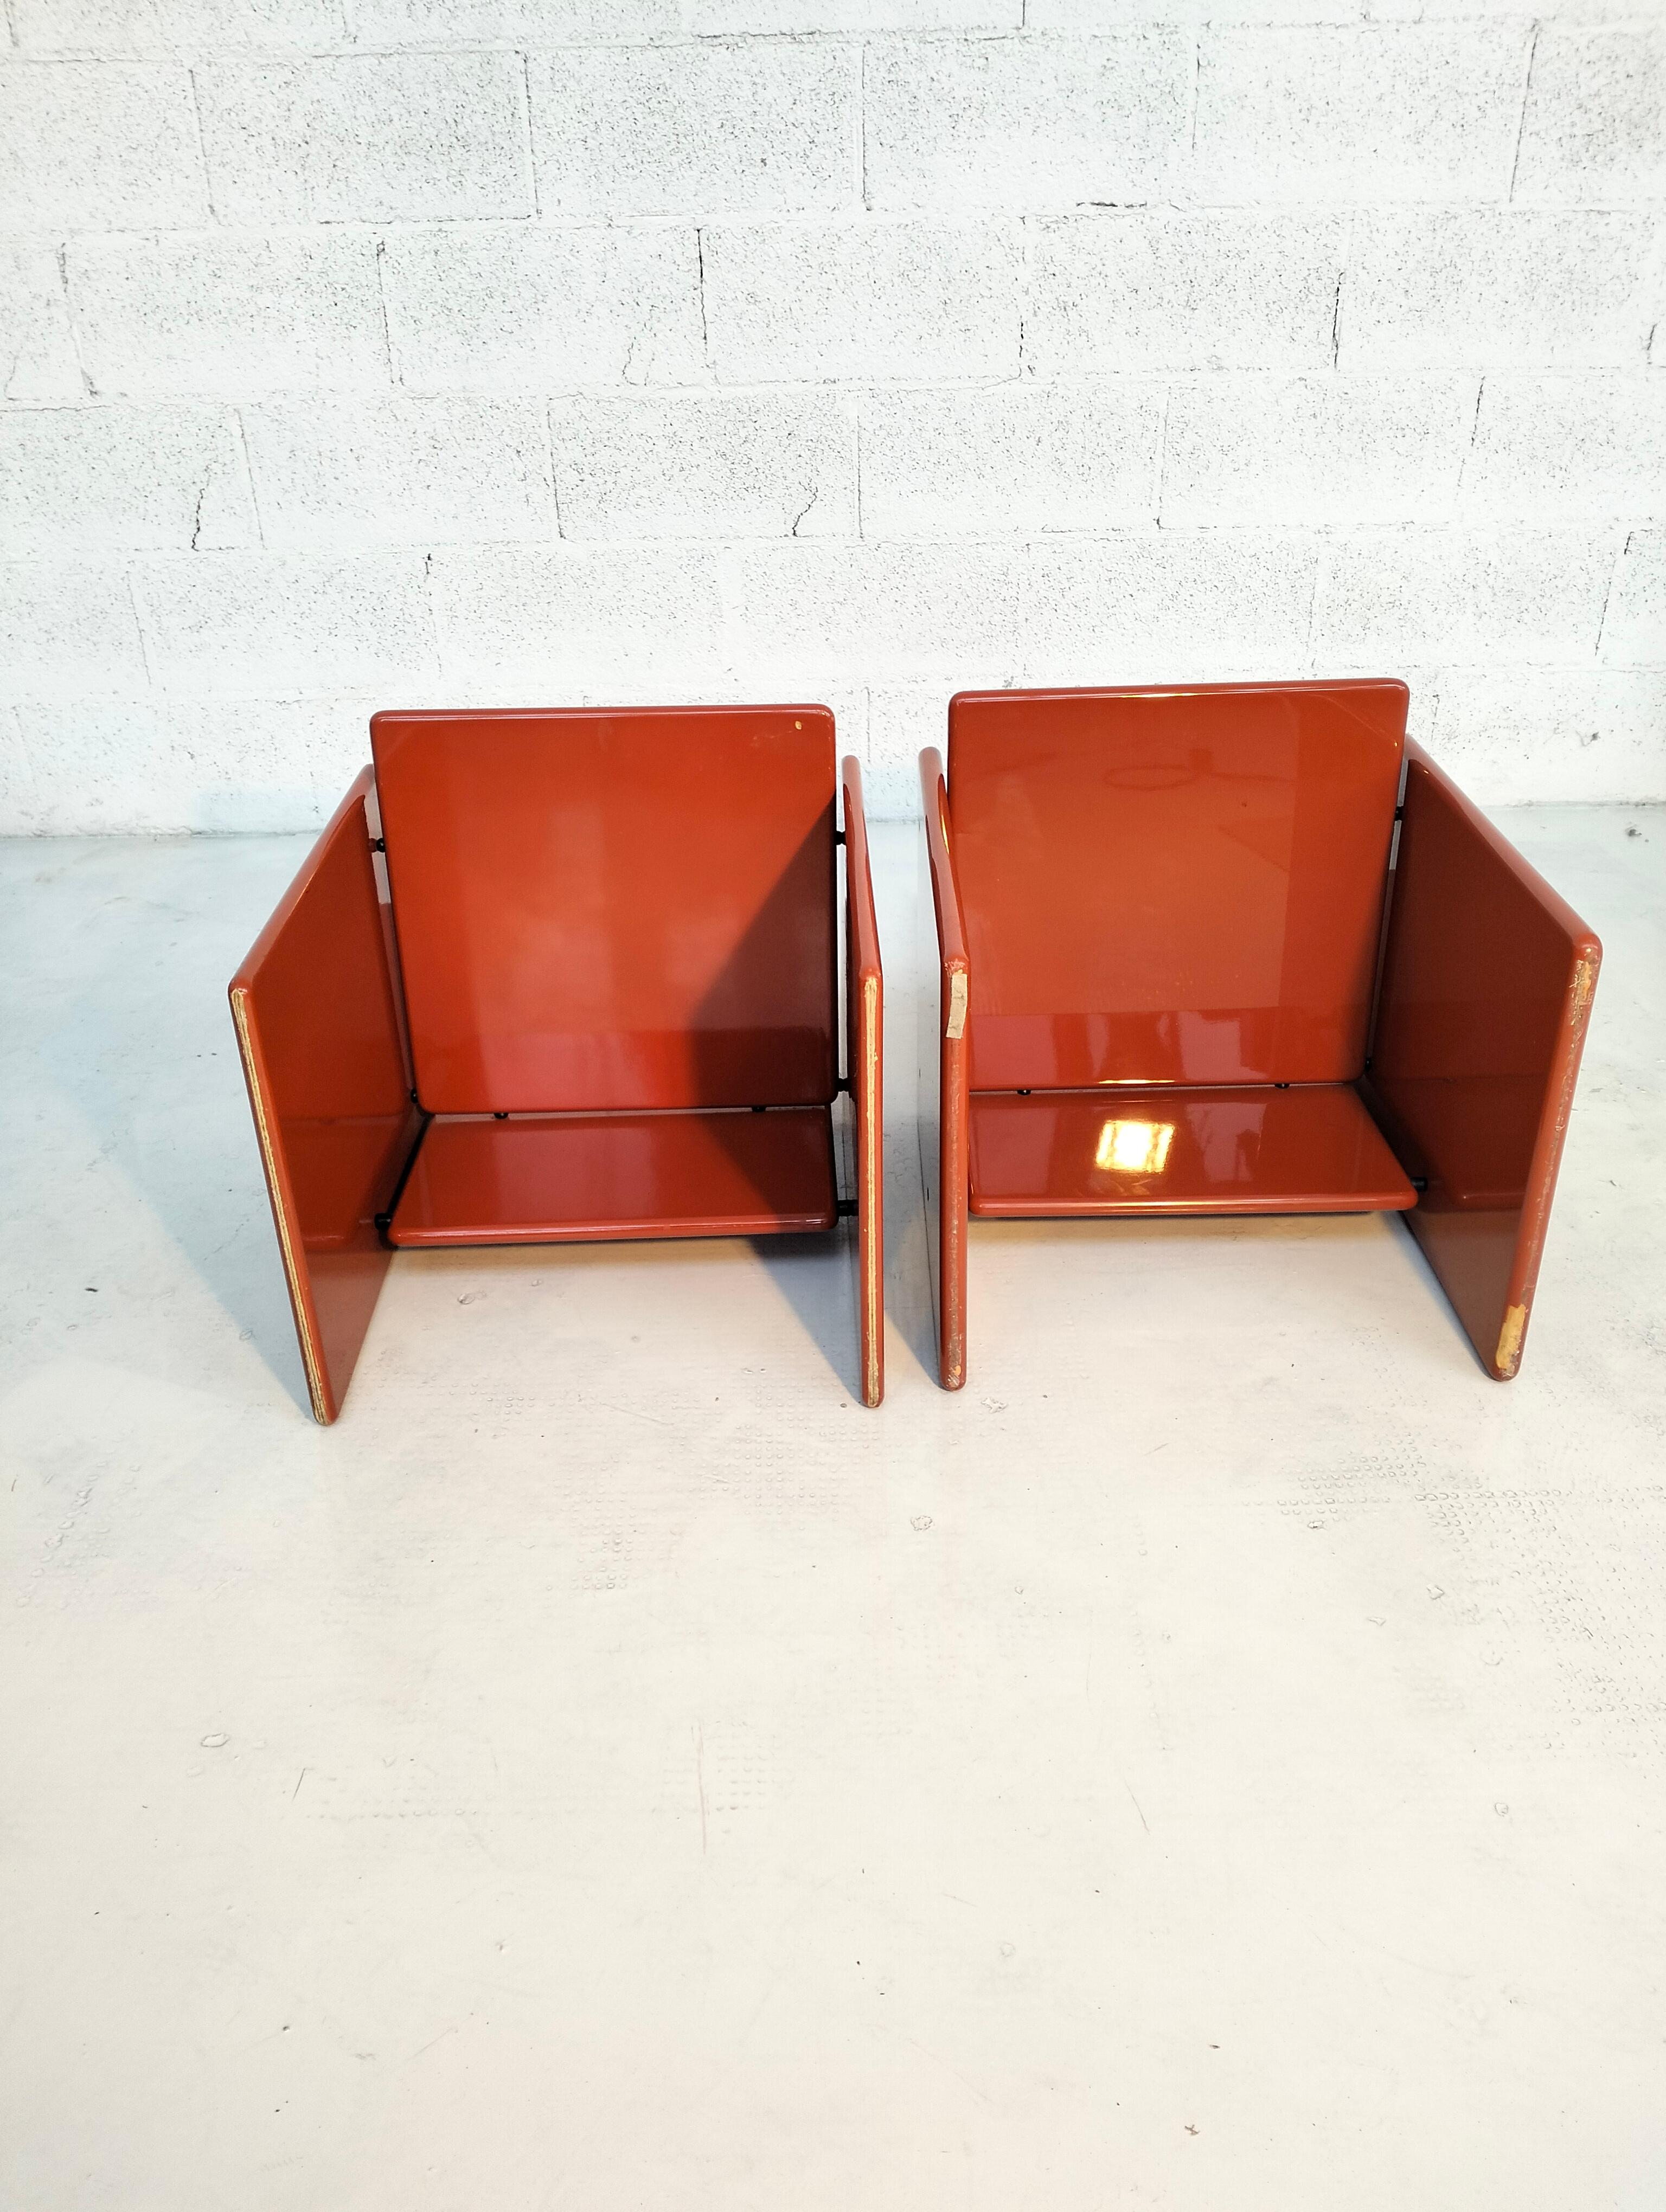 Lacquered Pair of 2 orange Kazuki chairs by Kazuhide Takahama for Simon 60s, 70s